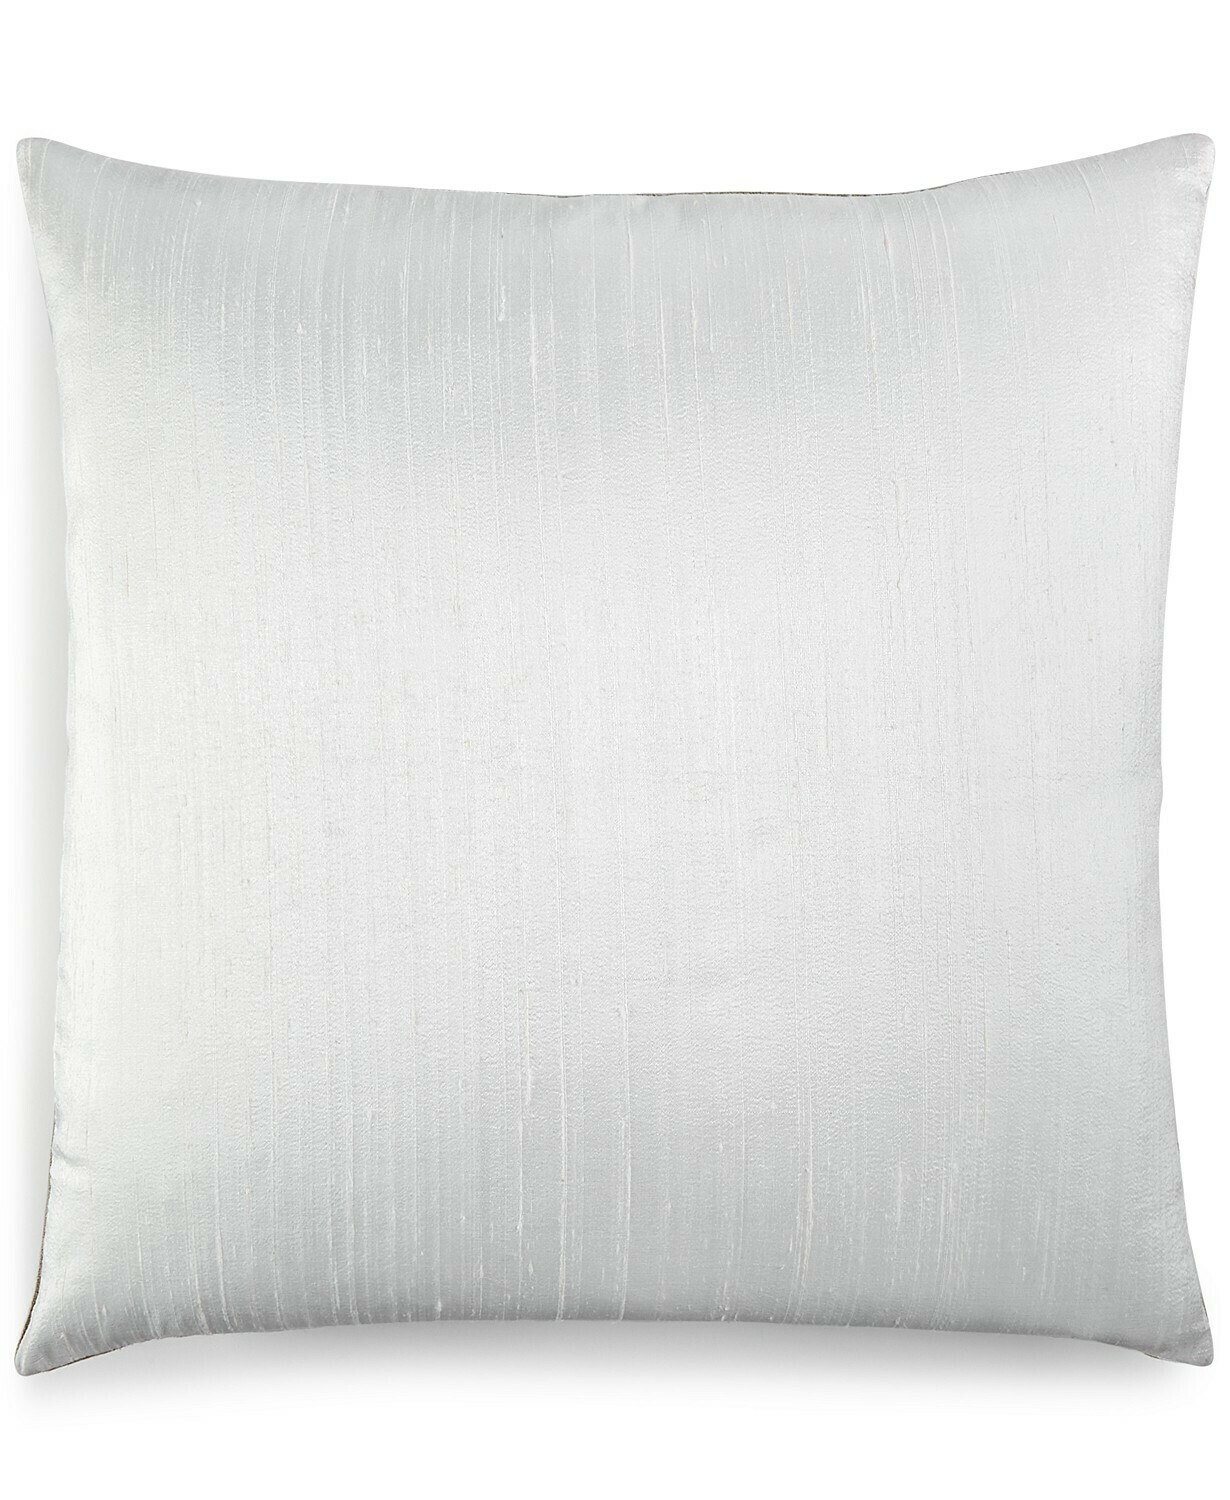 Jetrich Canada Dupioni White 20" x 20" Decorative Pillow